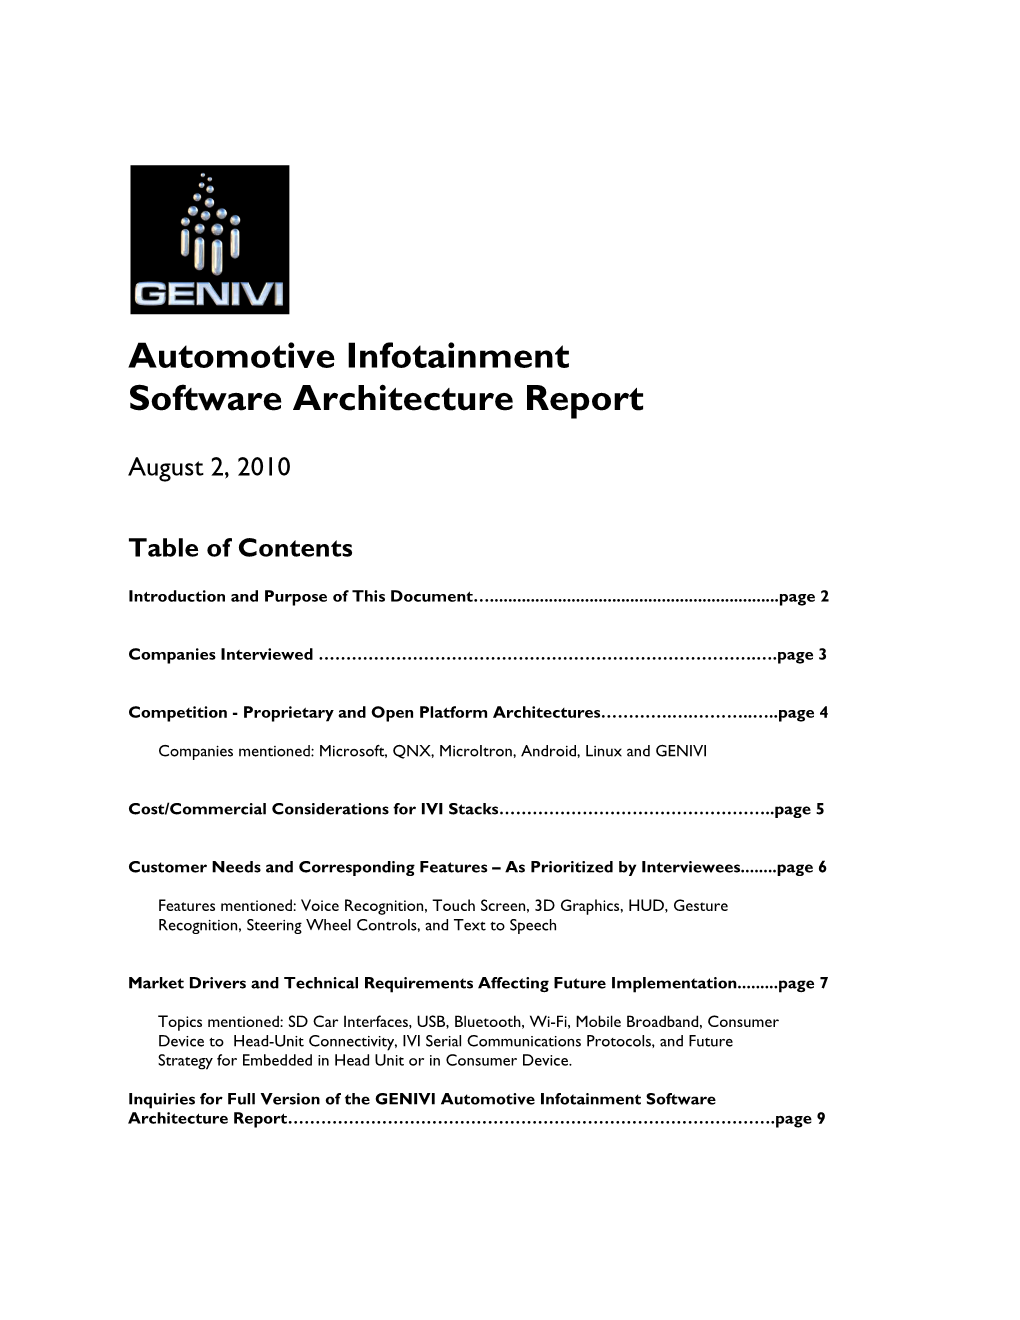 Automotive Infotainment Software Architecture Report